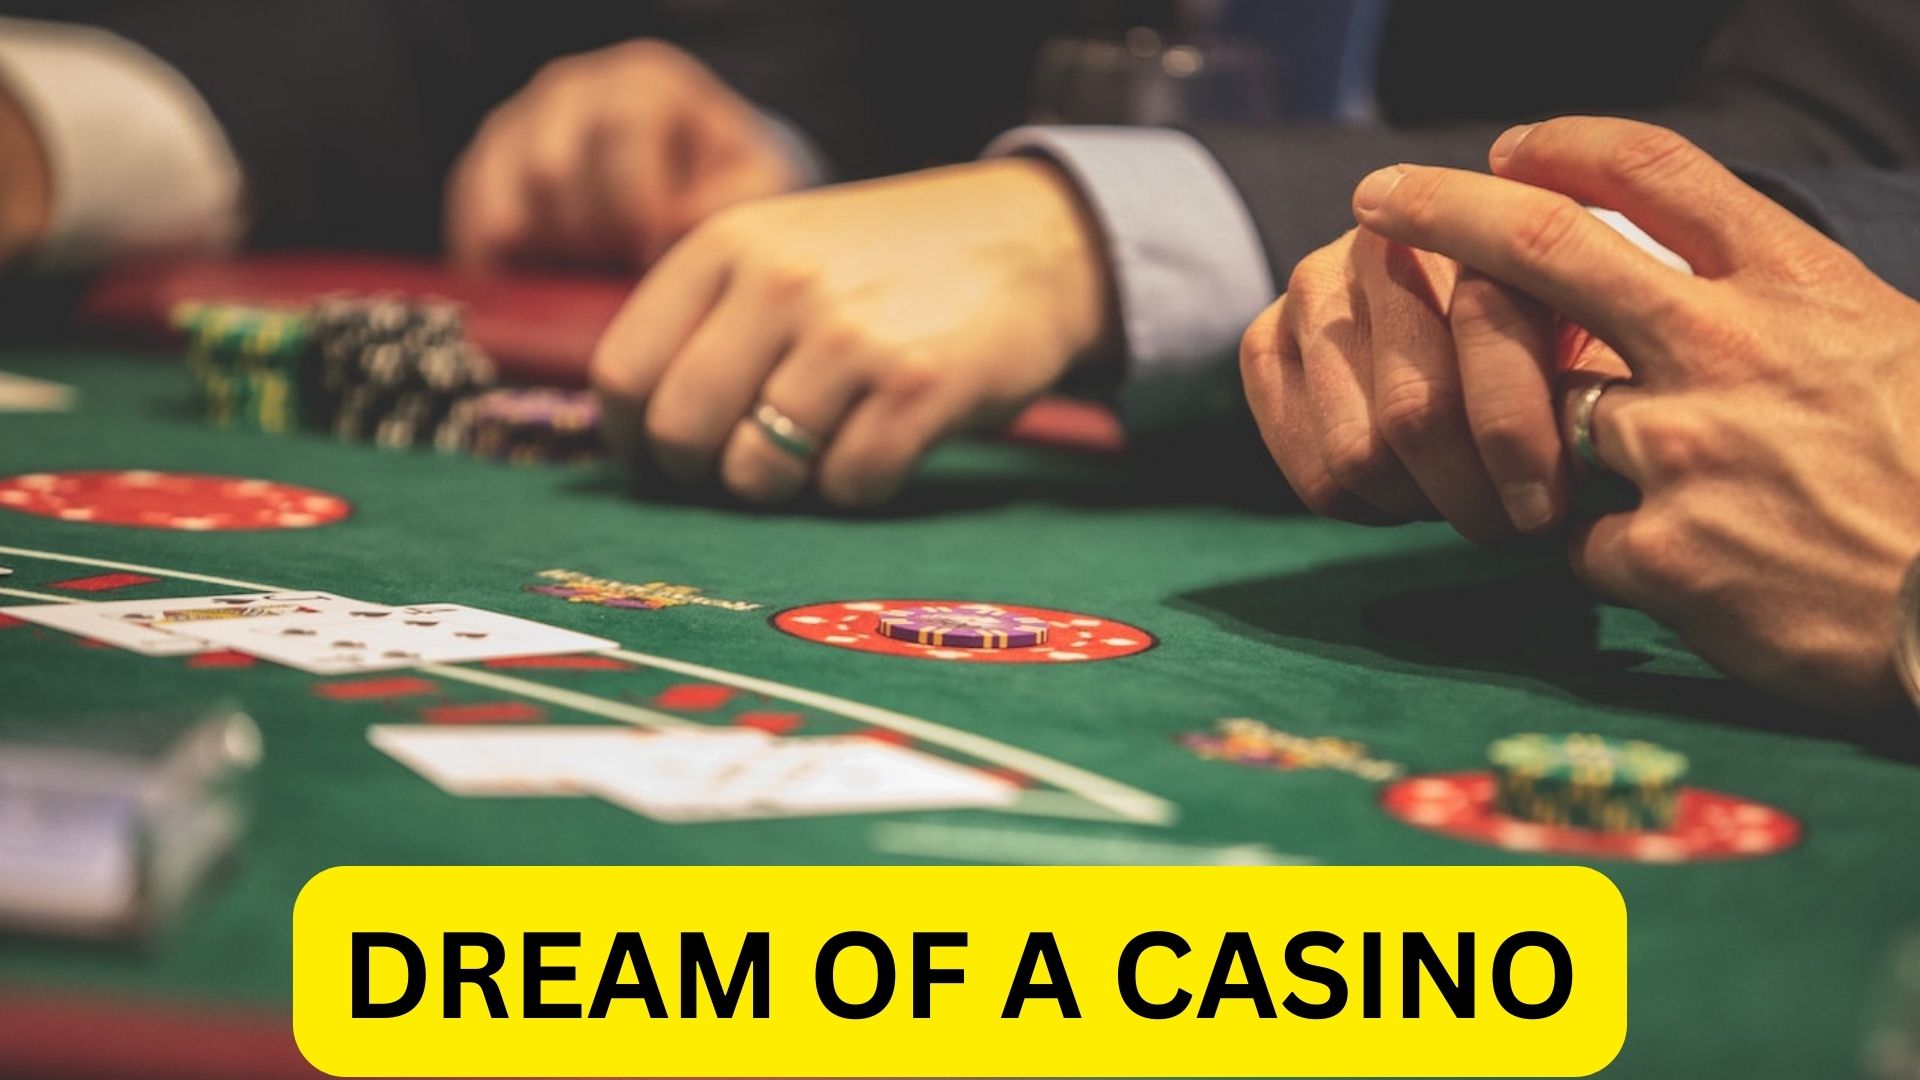 Dream Of A Casino - A Symbol Of Risk